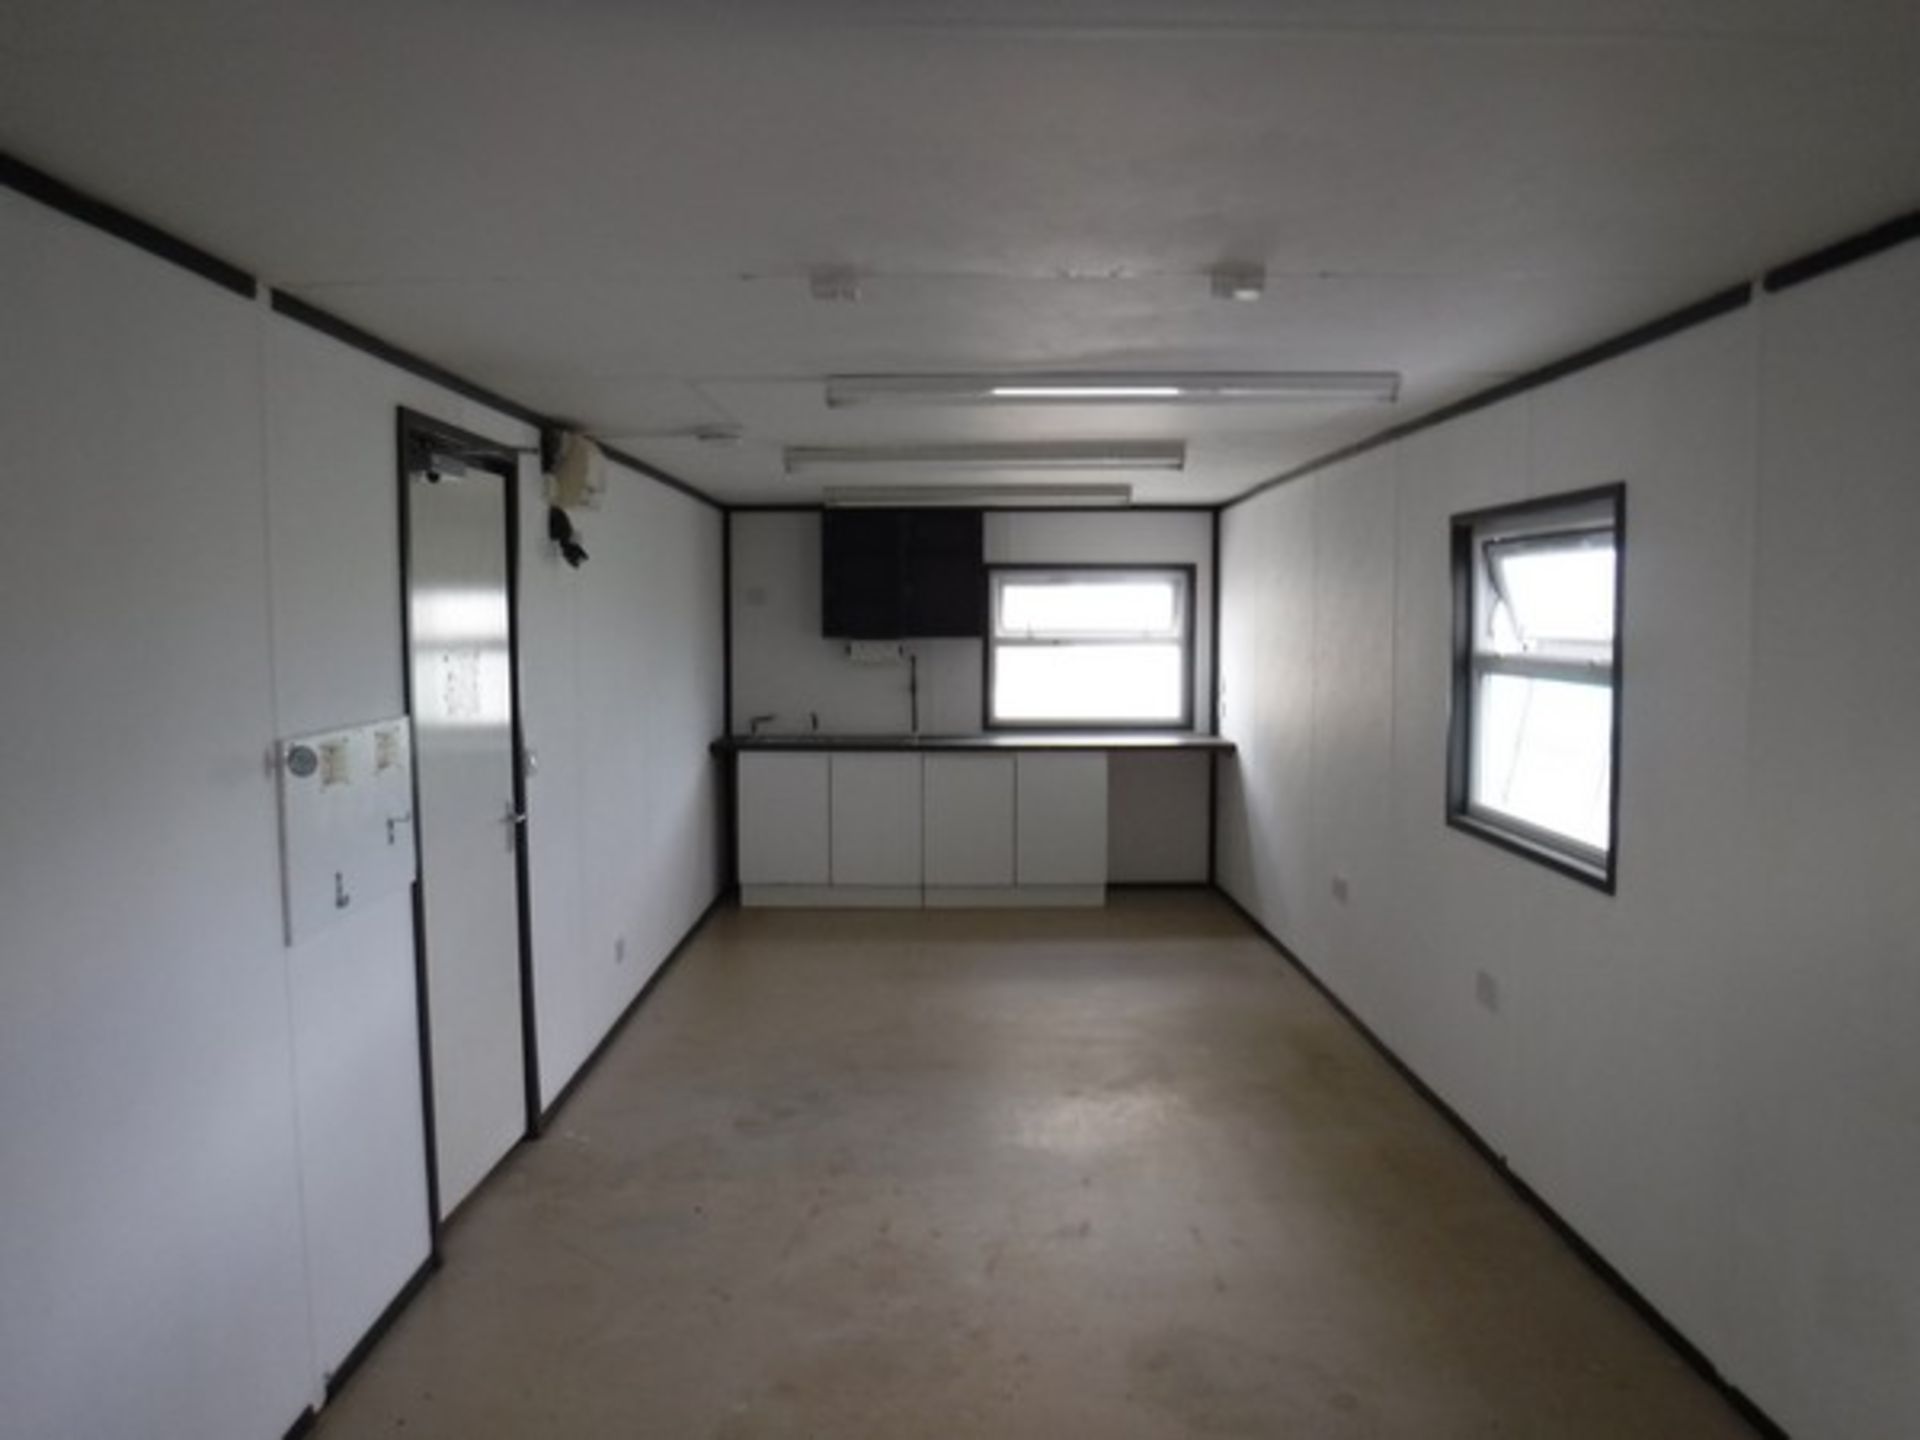 32' x 10' JACKLEG canteen cabin - Image 5 of 7